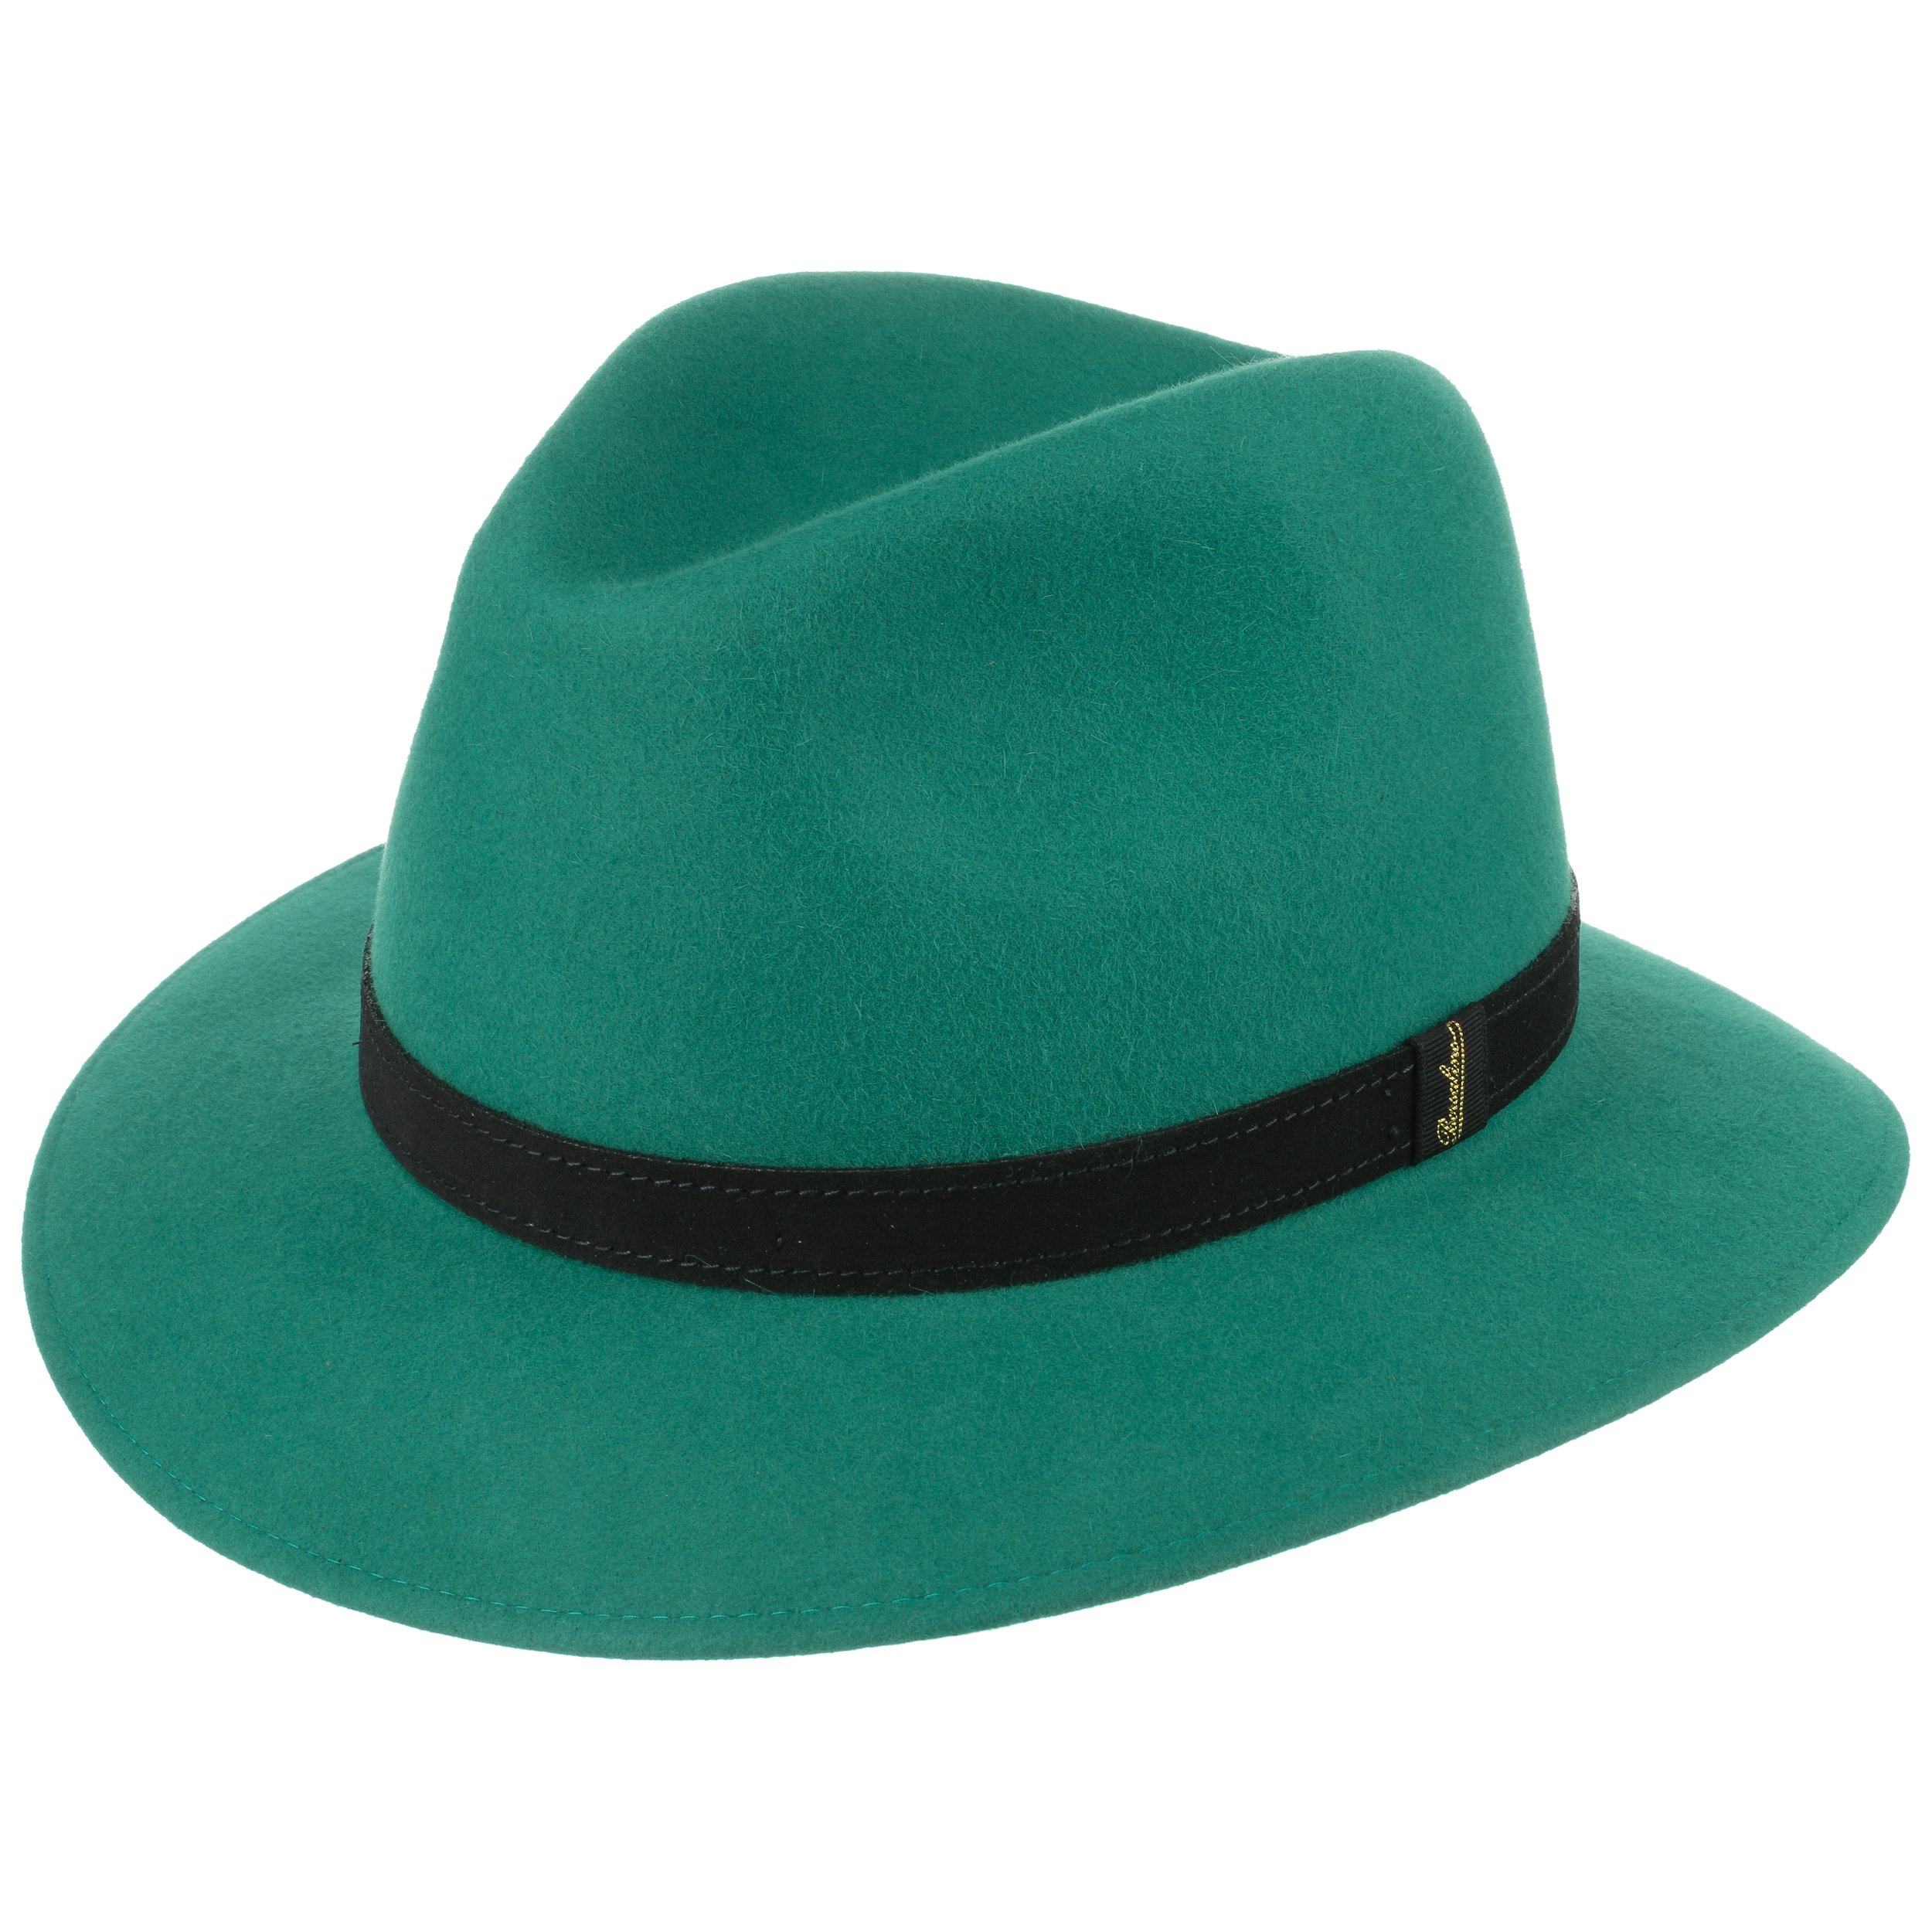 Alessandria Fur Felt Hat by Borsalino